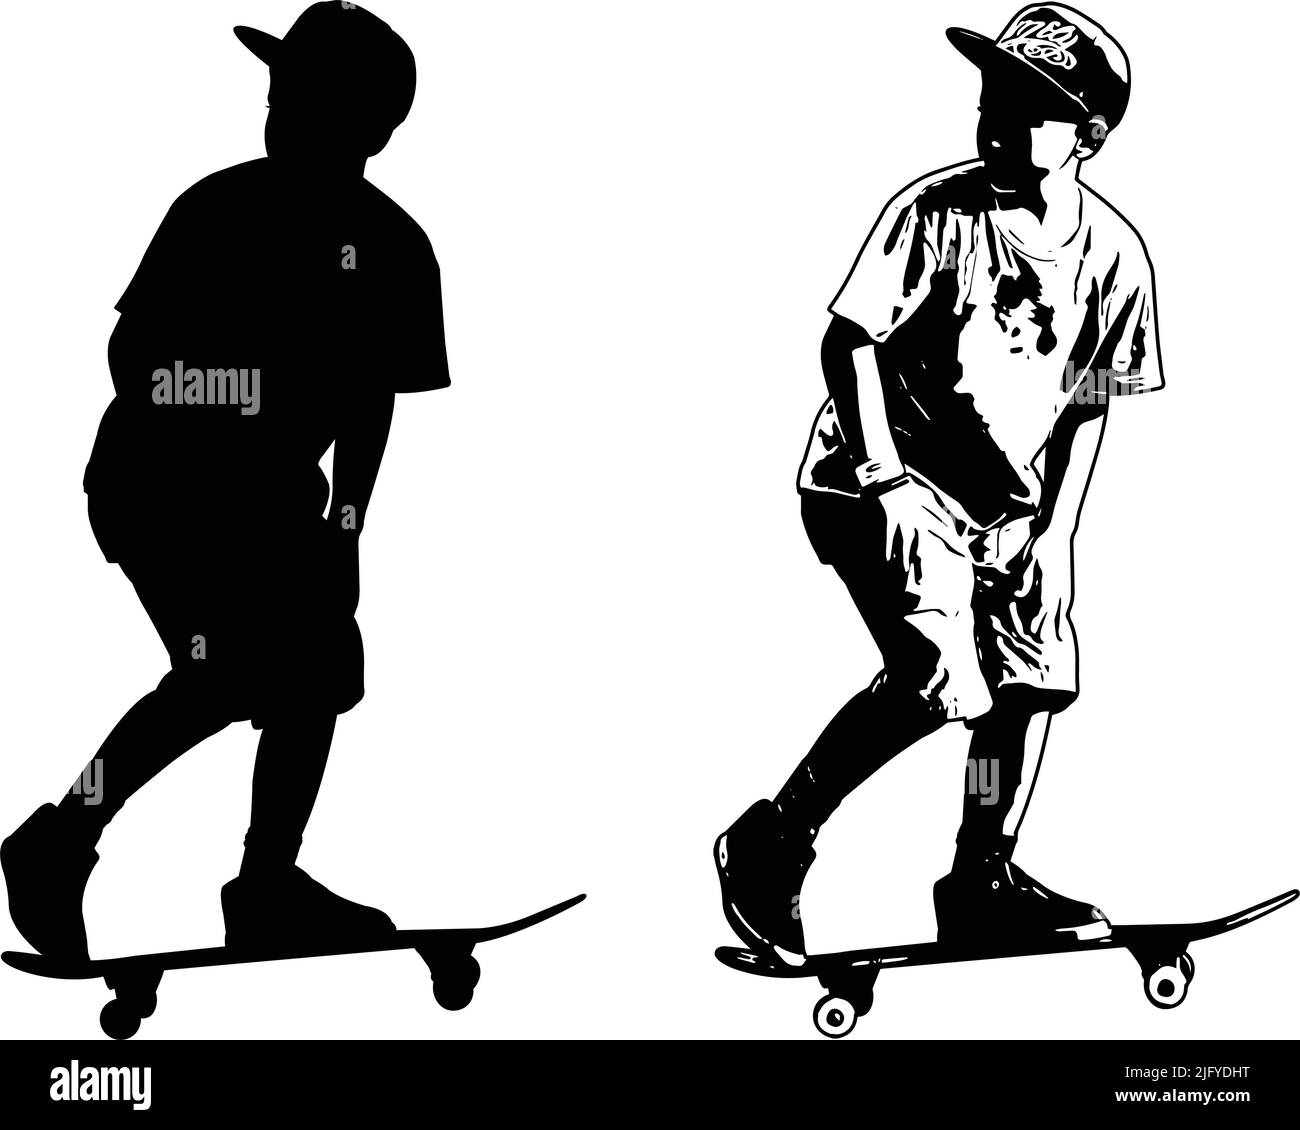 skateboarder kid, silhouette and sketch illustration - vector Stock Vector